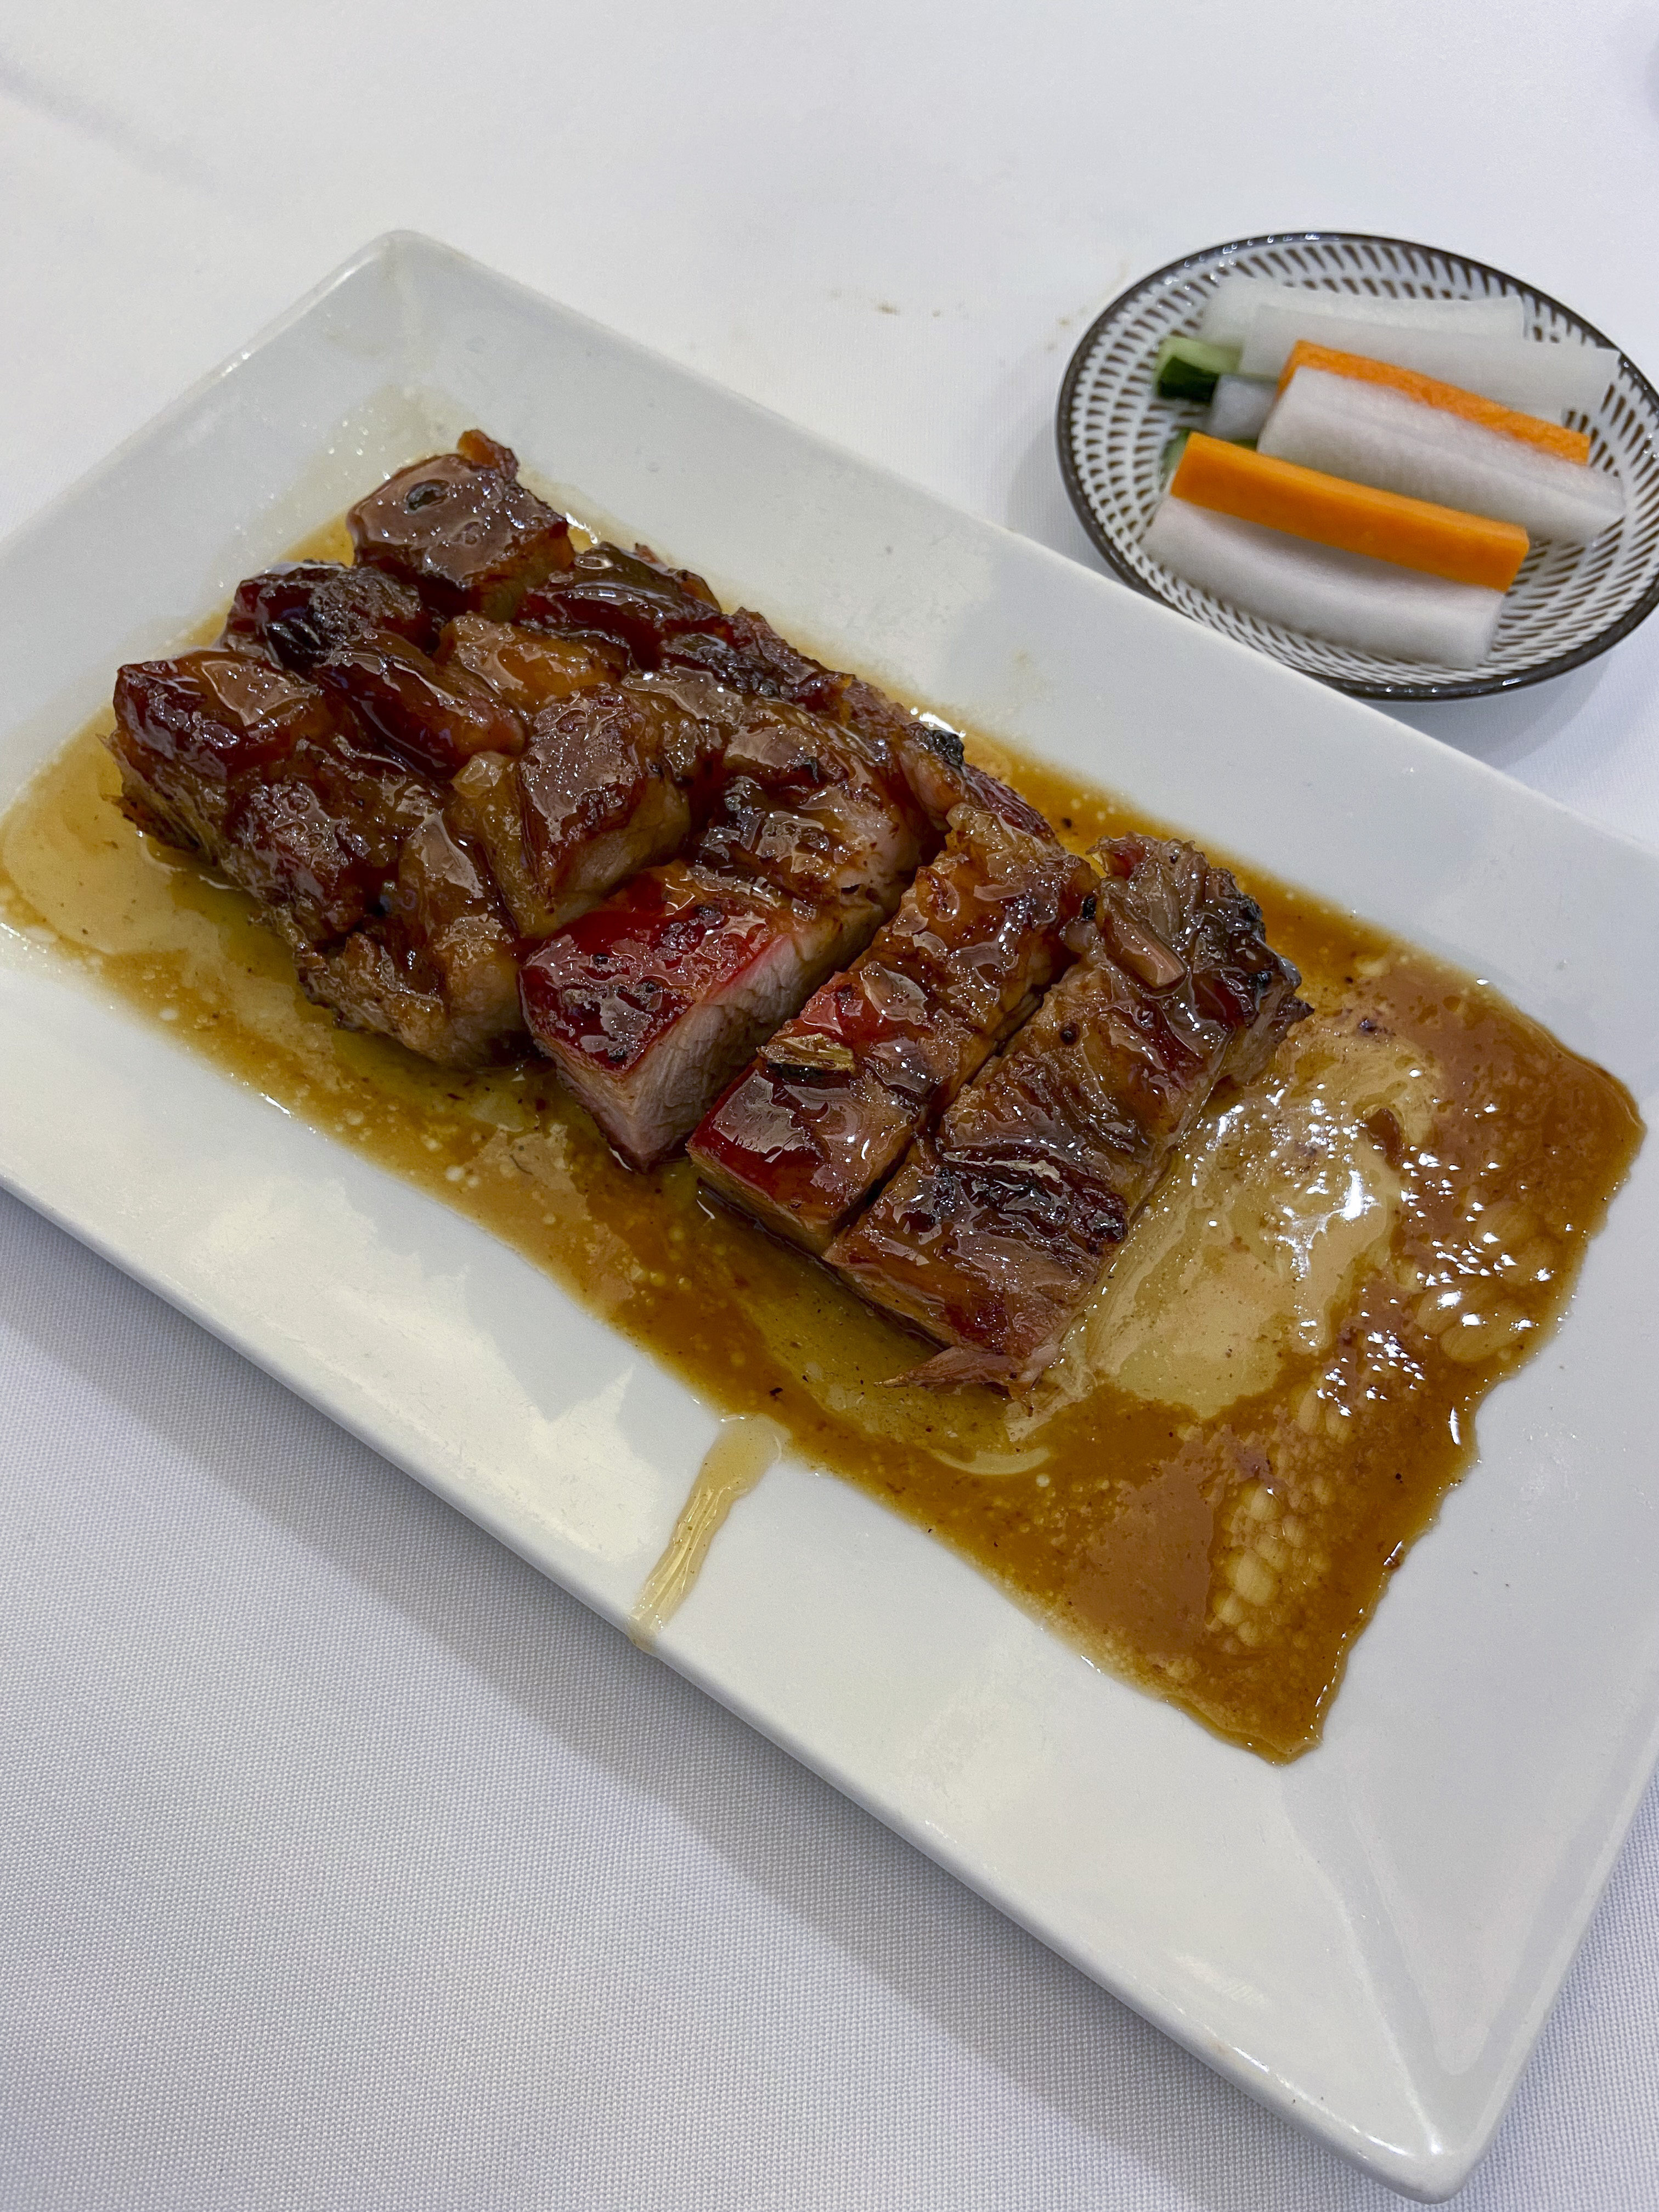 Master Woo’s honey-glazed barbecue pork. Photo: Susan Jung